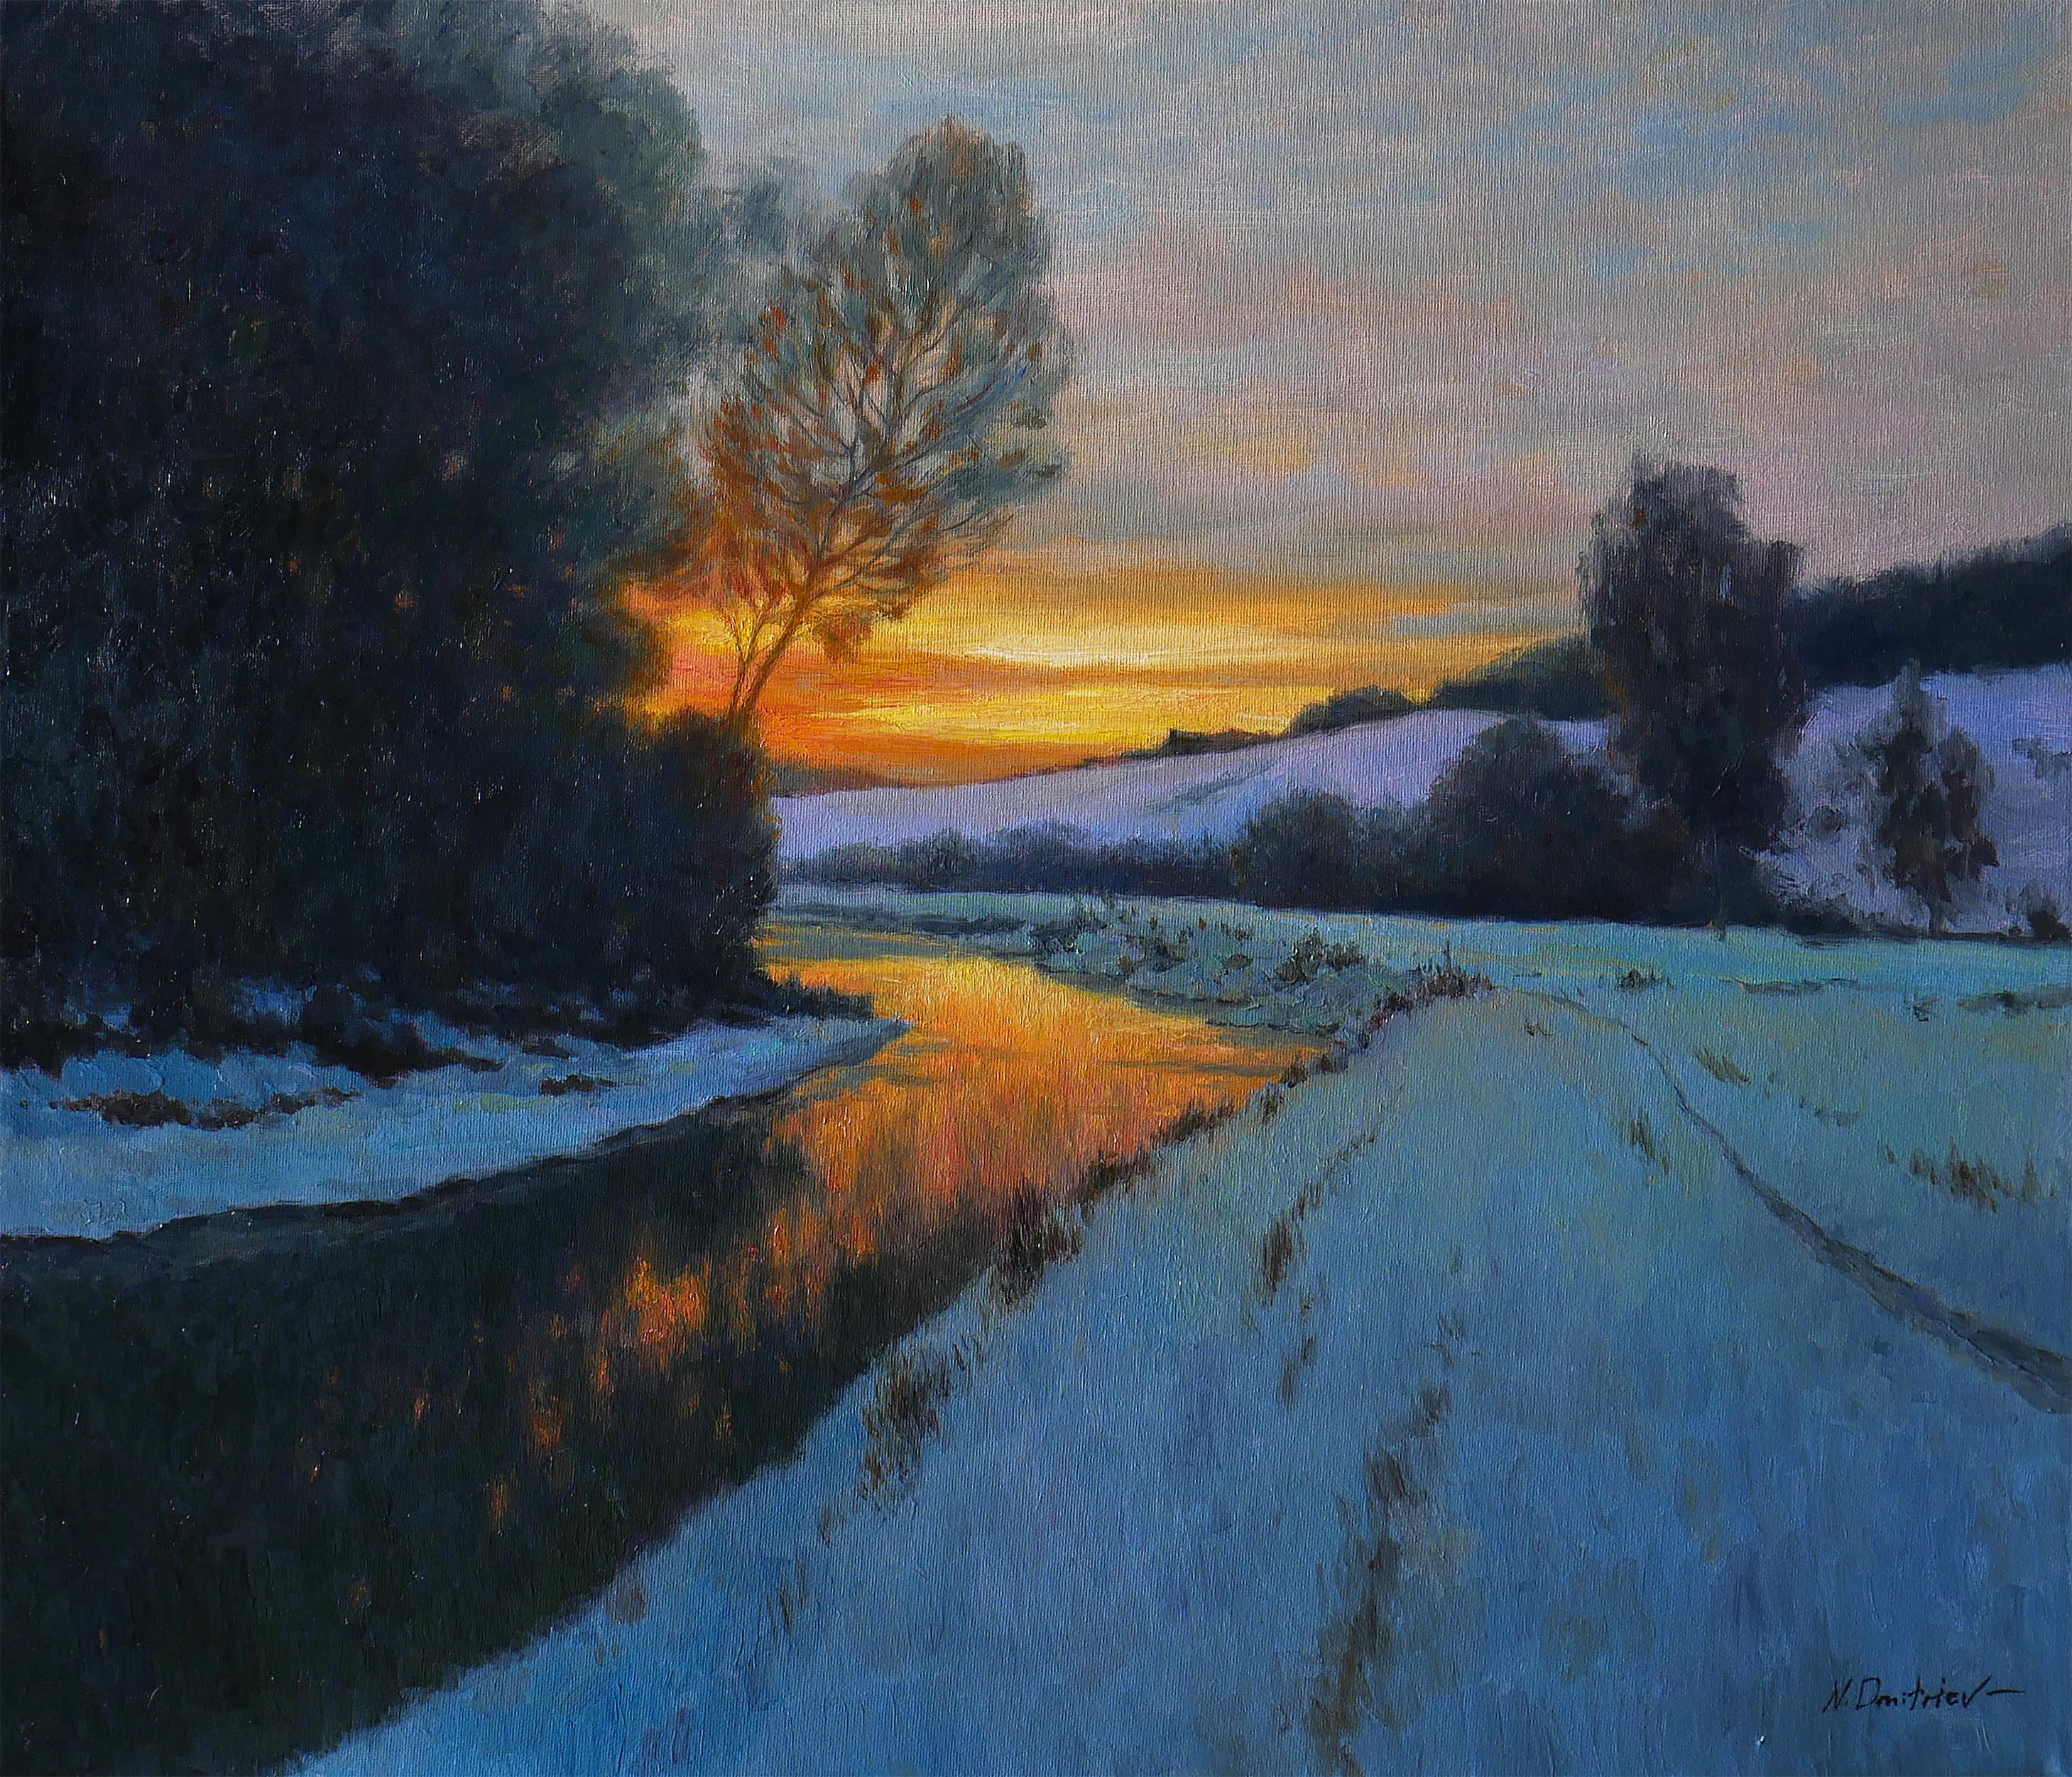 Nikolay Dmitriev Interior Painting - Fleeting - winter evening landscape painting